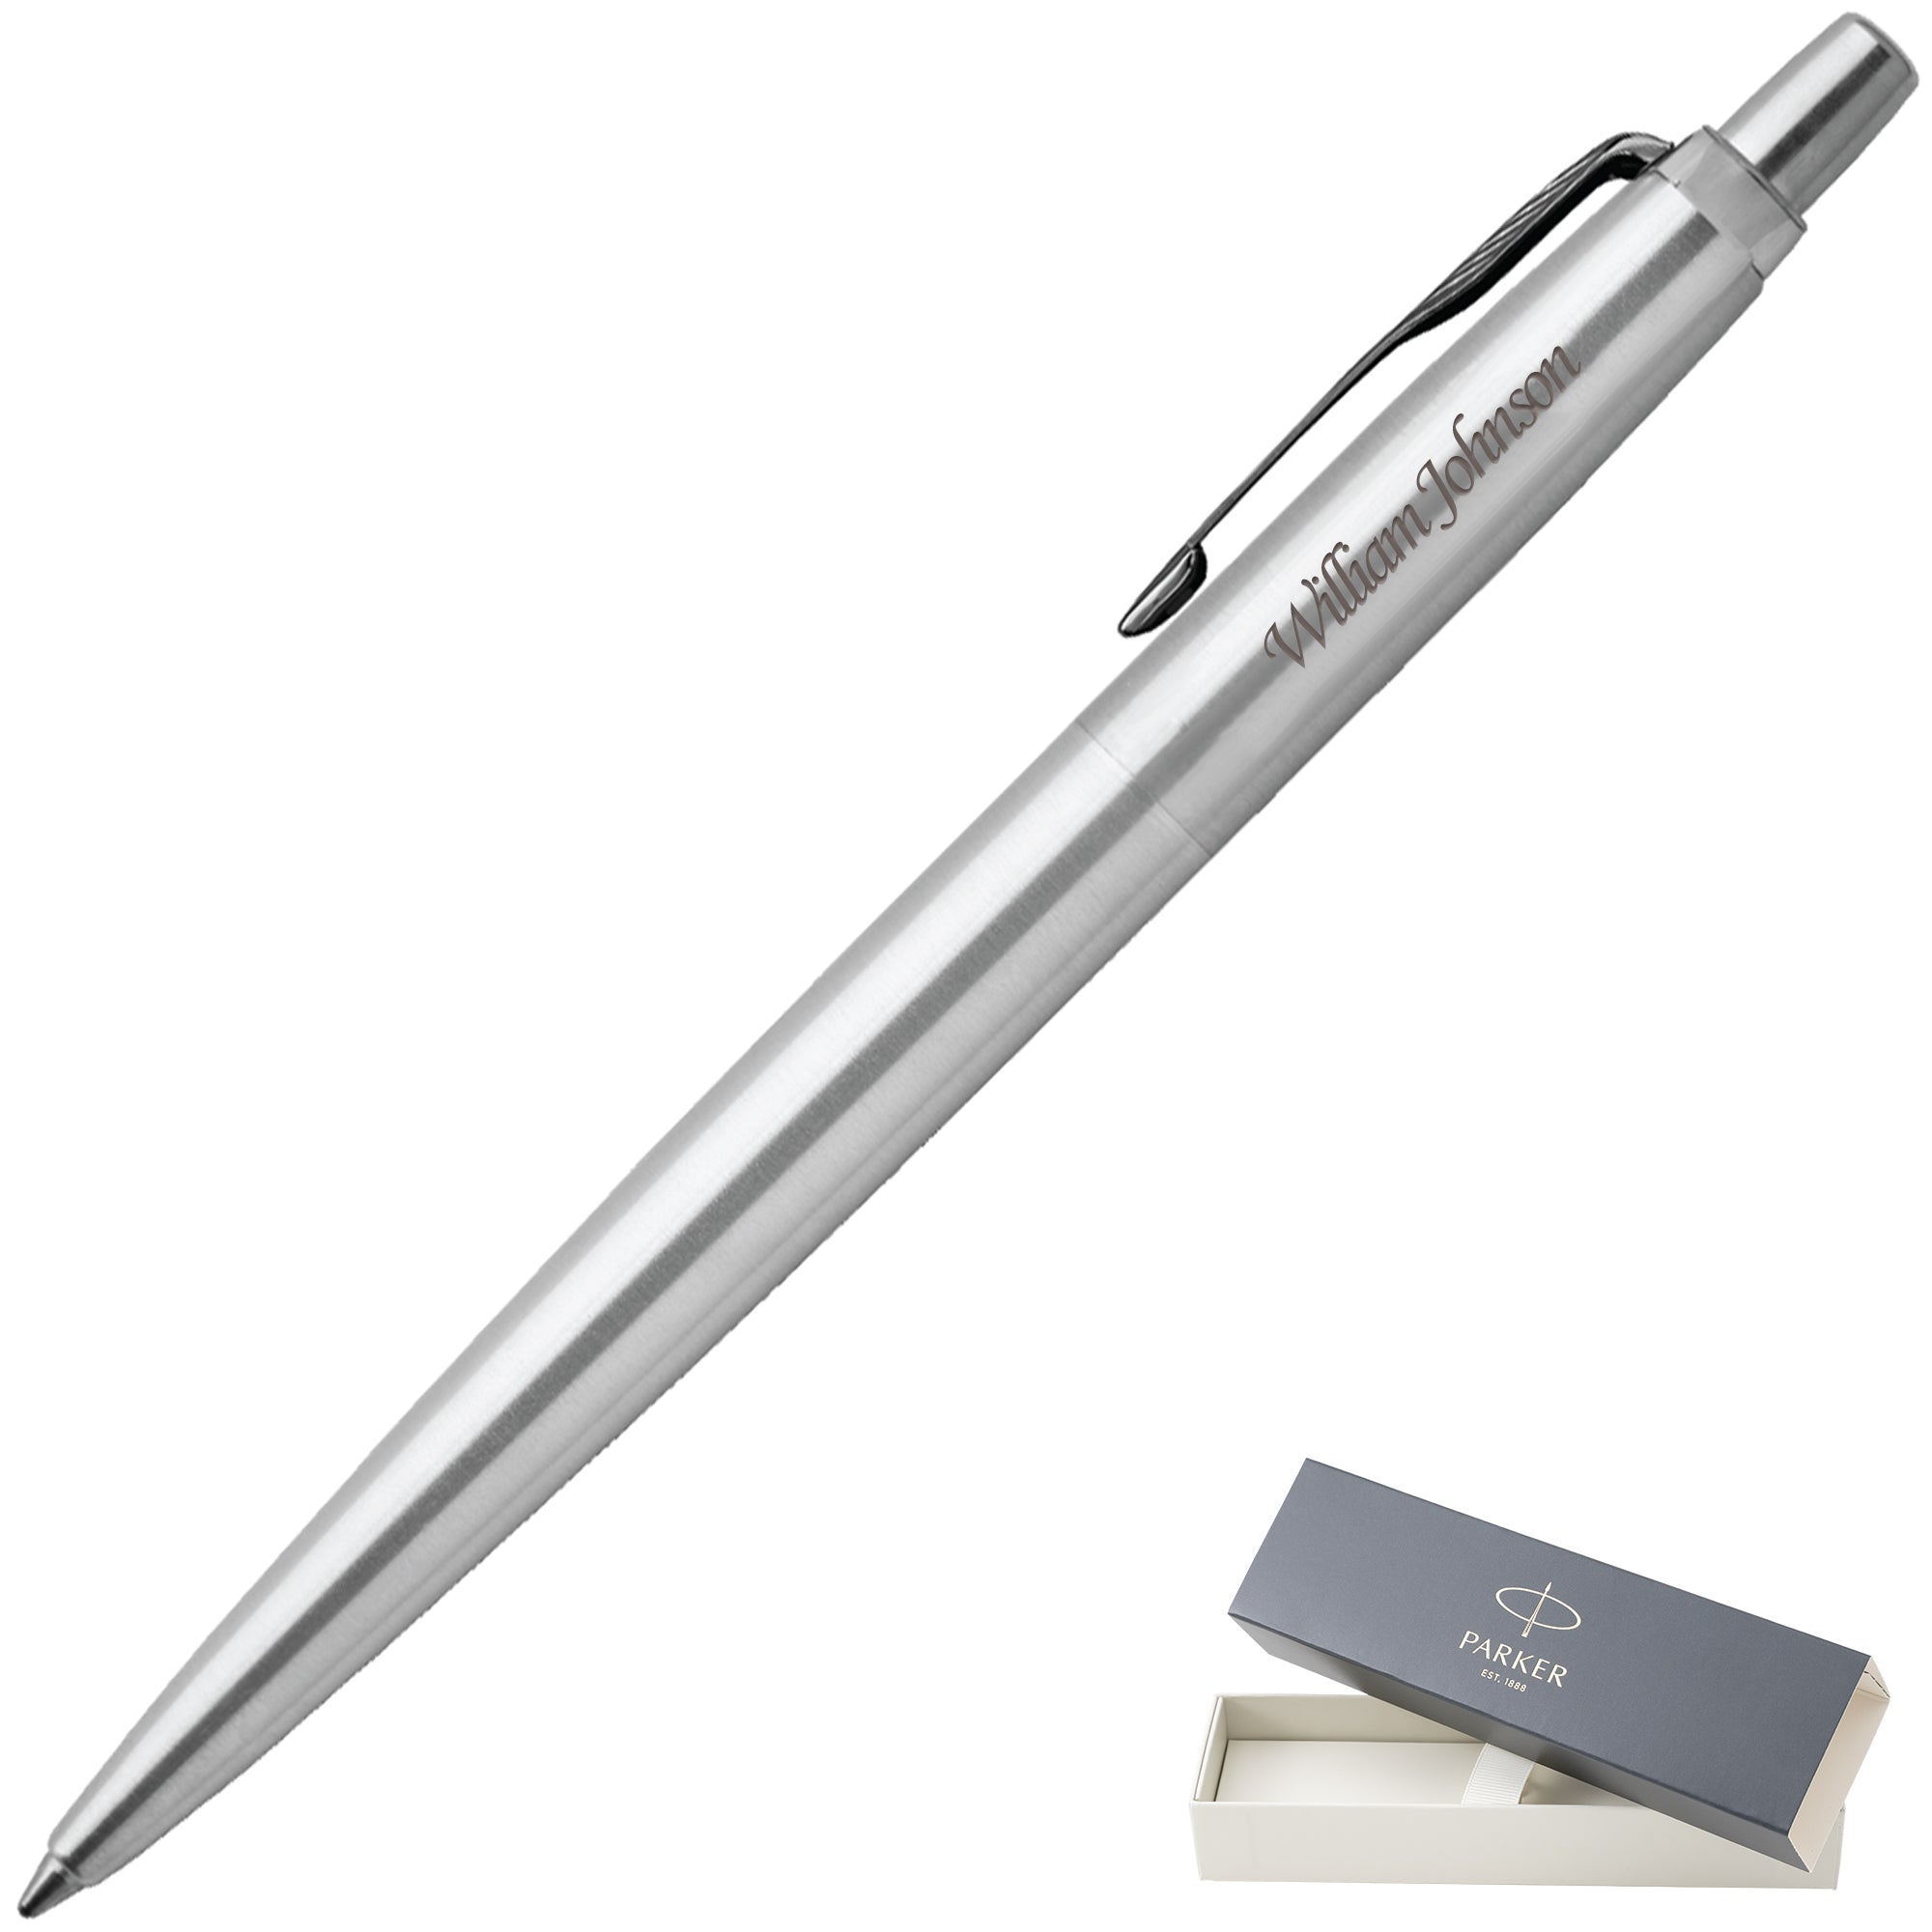 Neon Sassy Weekday Pen Gel Pen Set, Glitter Pen Set, Personalized Pen,  Refillable Pen, Gifts for Her, Teacher / Office Gift